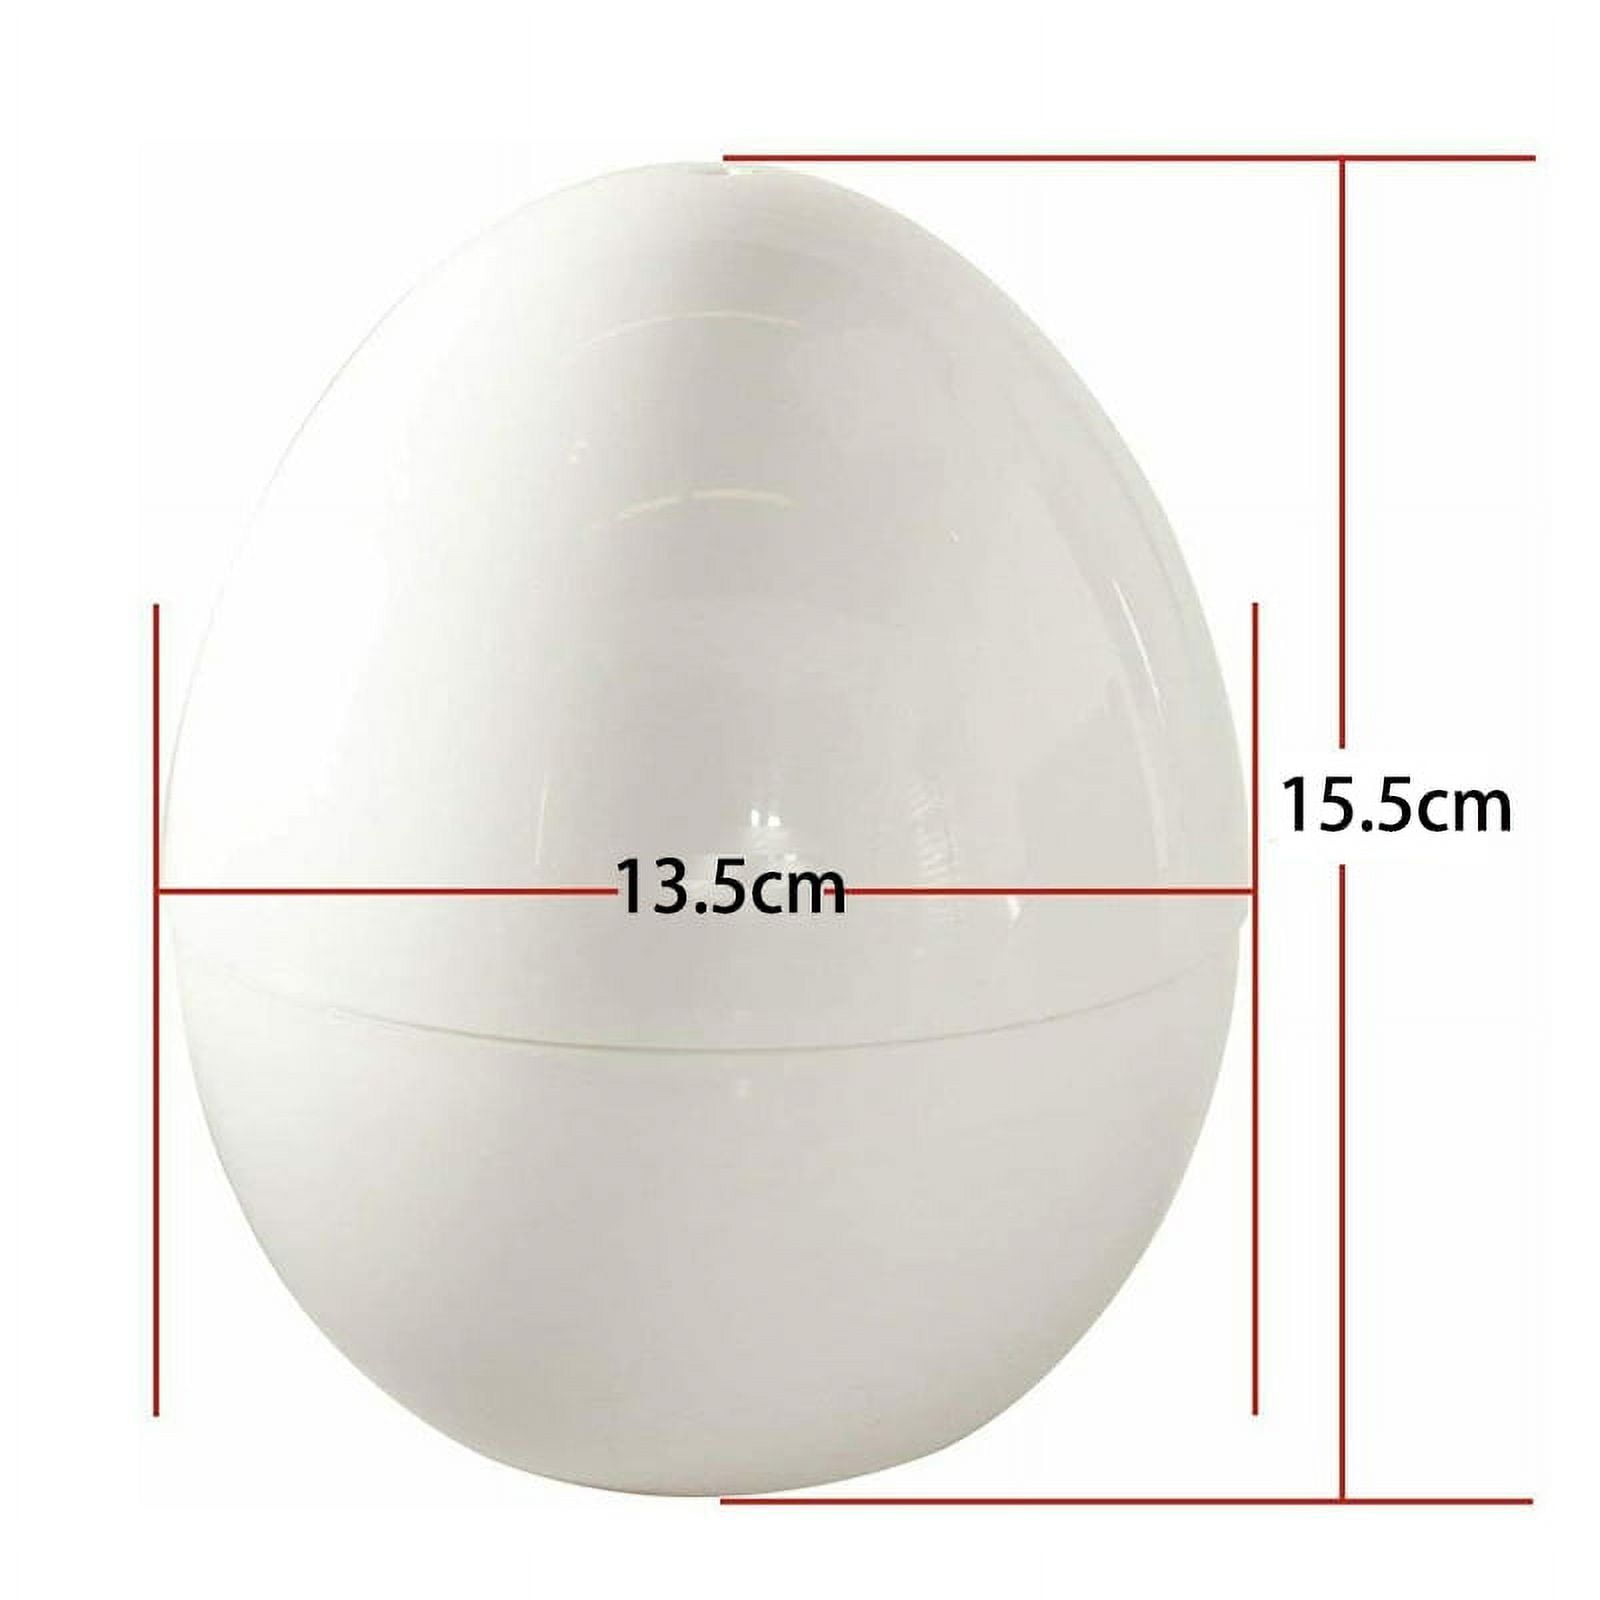 TAMOSH Egg Pod - Microwave Egg Boiler Cooker Egg Steamer Perfectly Eggs and  Detaches the Shell